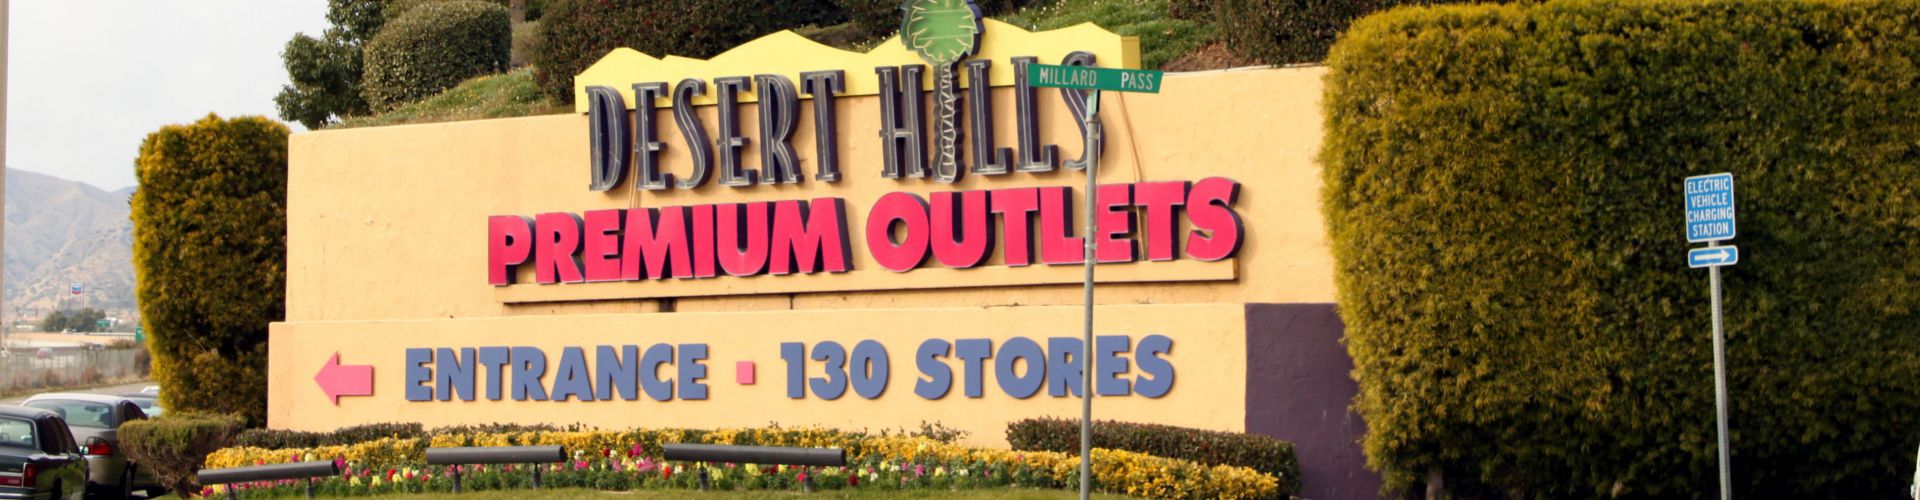 Desert Hills Premium Outlets - Commercial Center - Palm Springs - Reviews - ellgeeBE